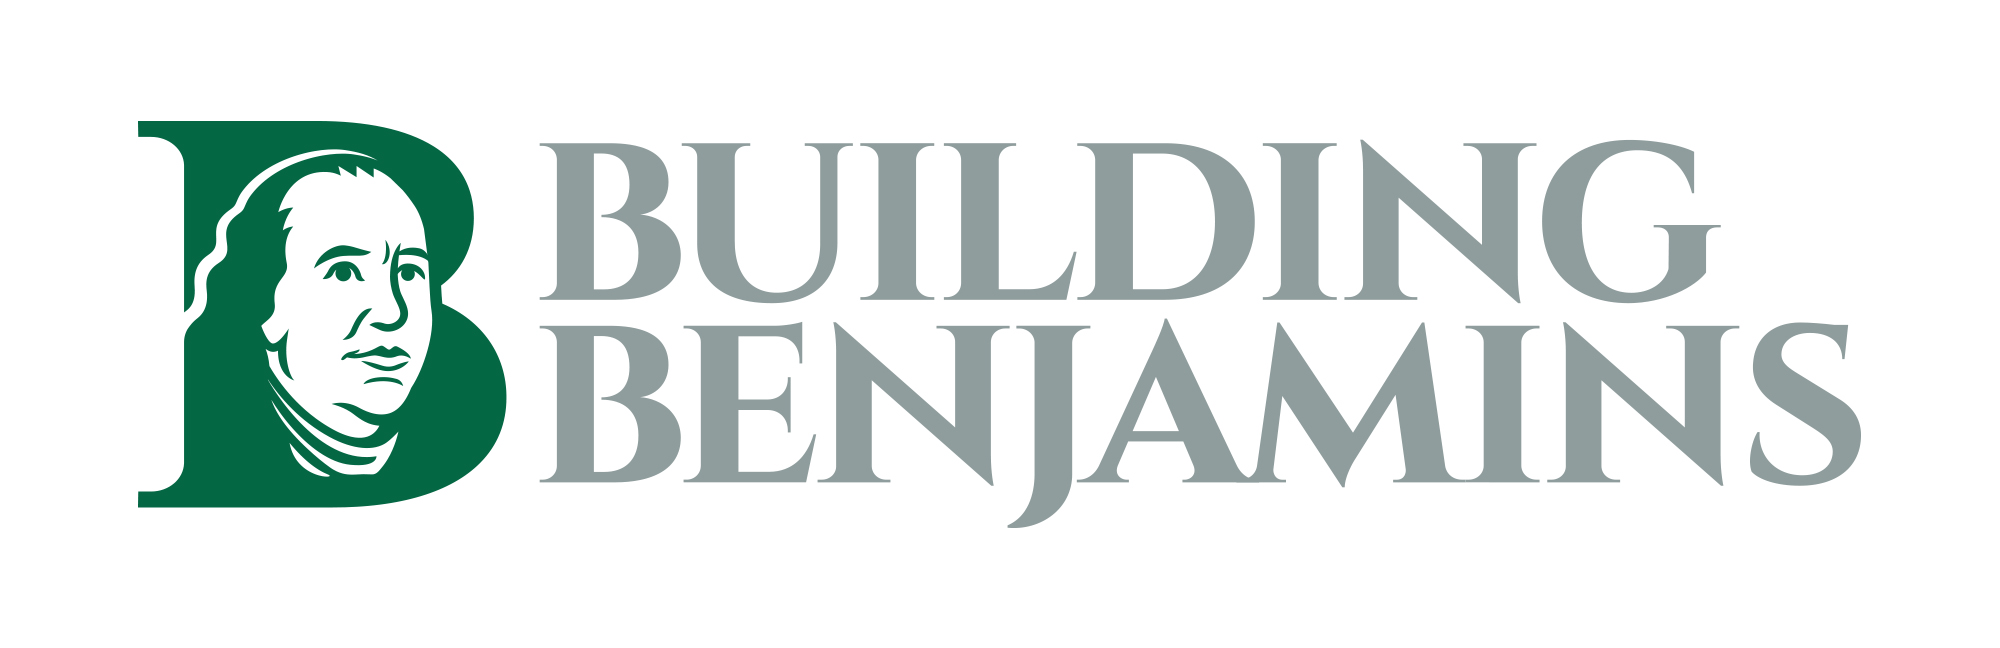 Building Benjamins launches robo advisor